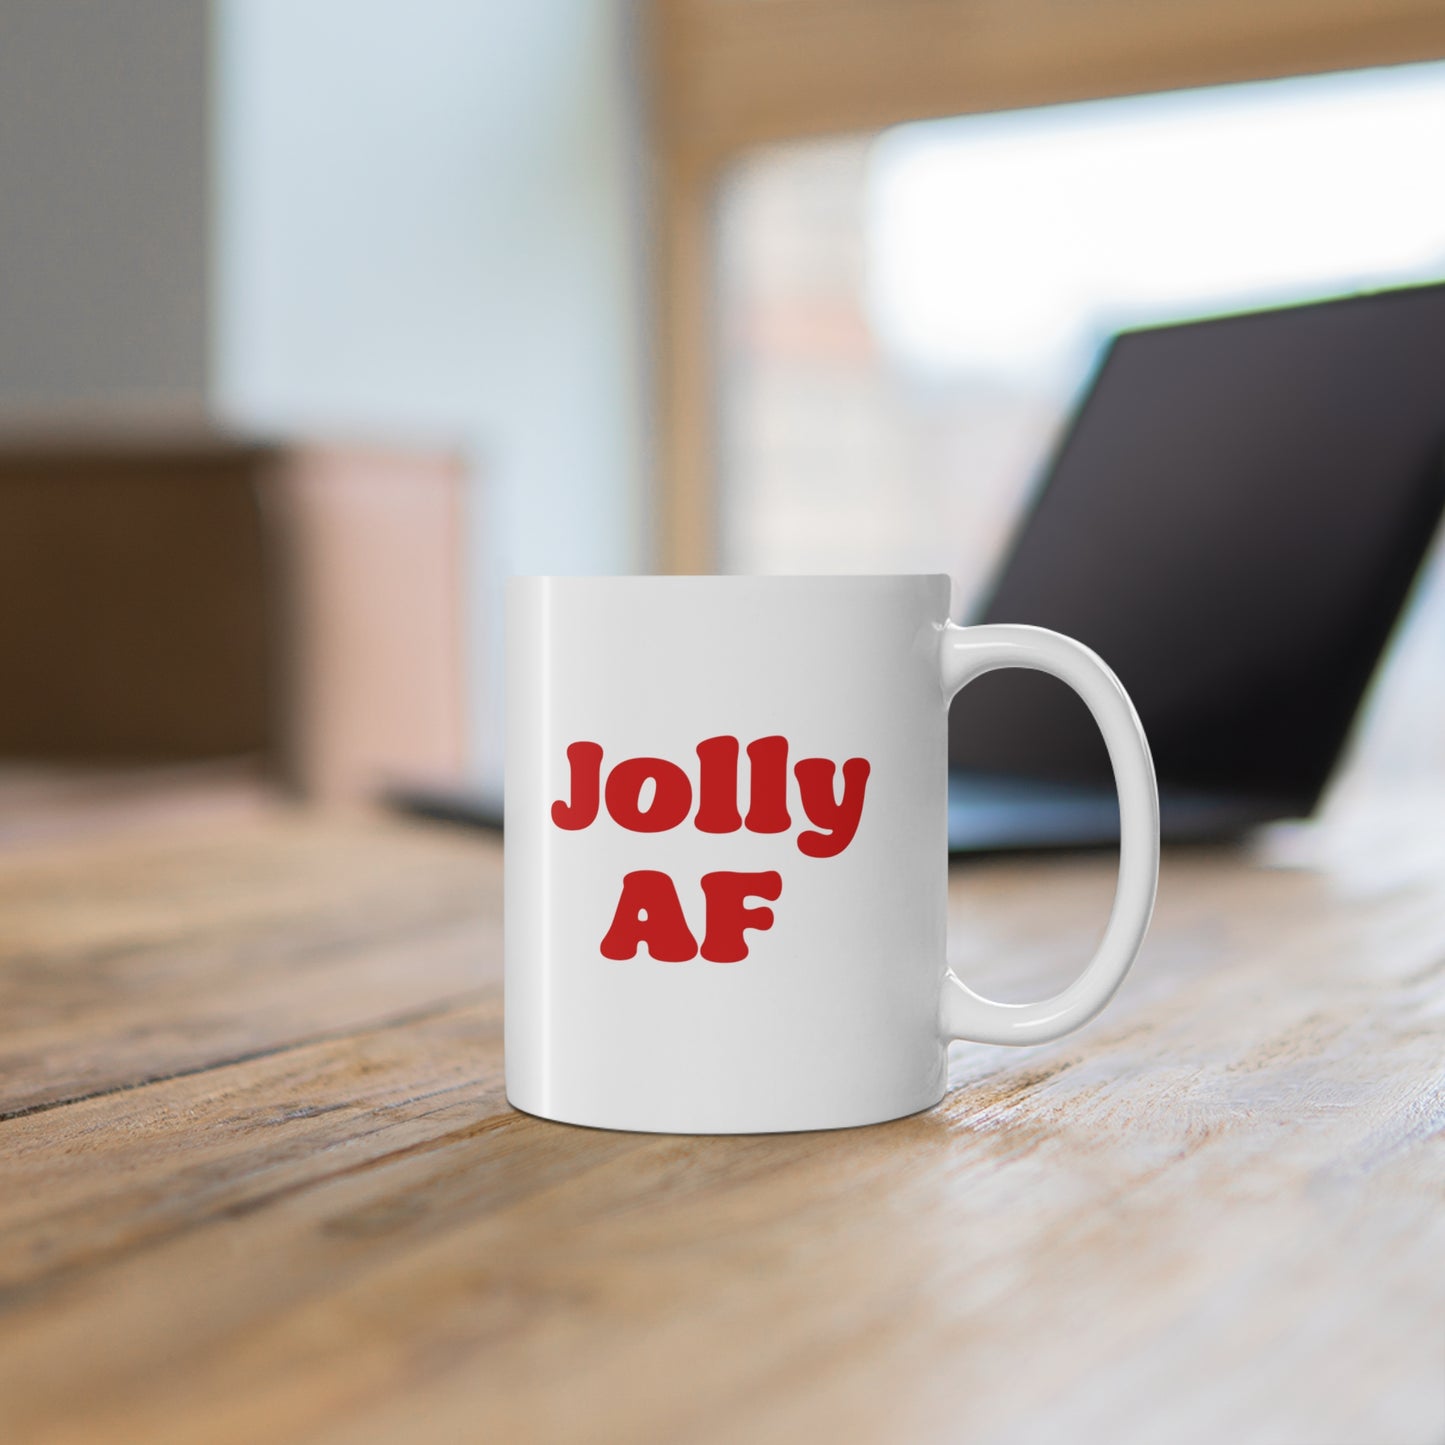 11oz ceramic mug with quote Jolly AF